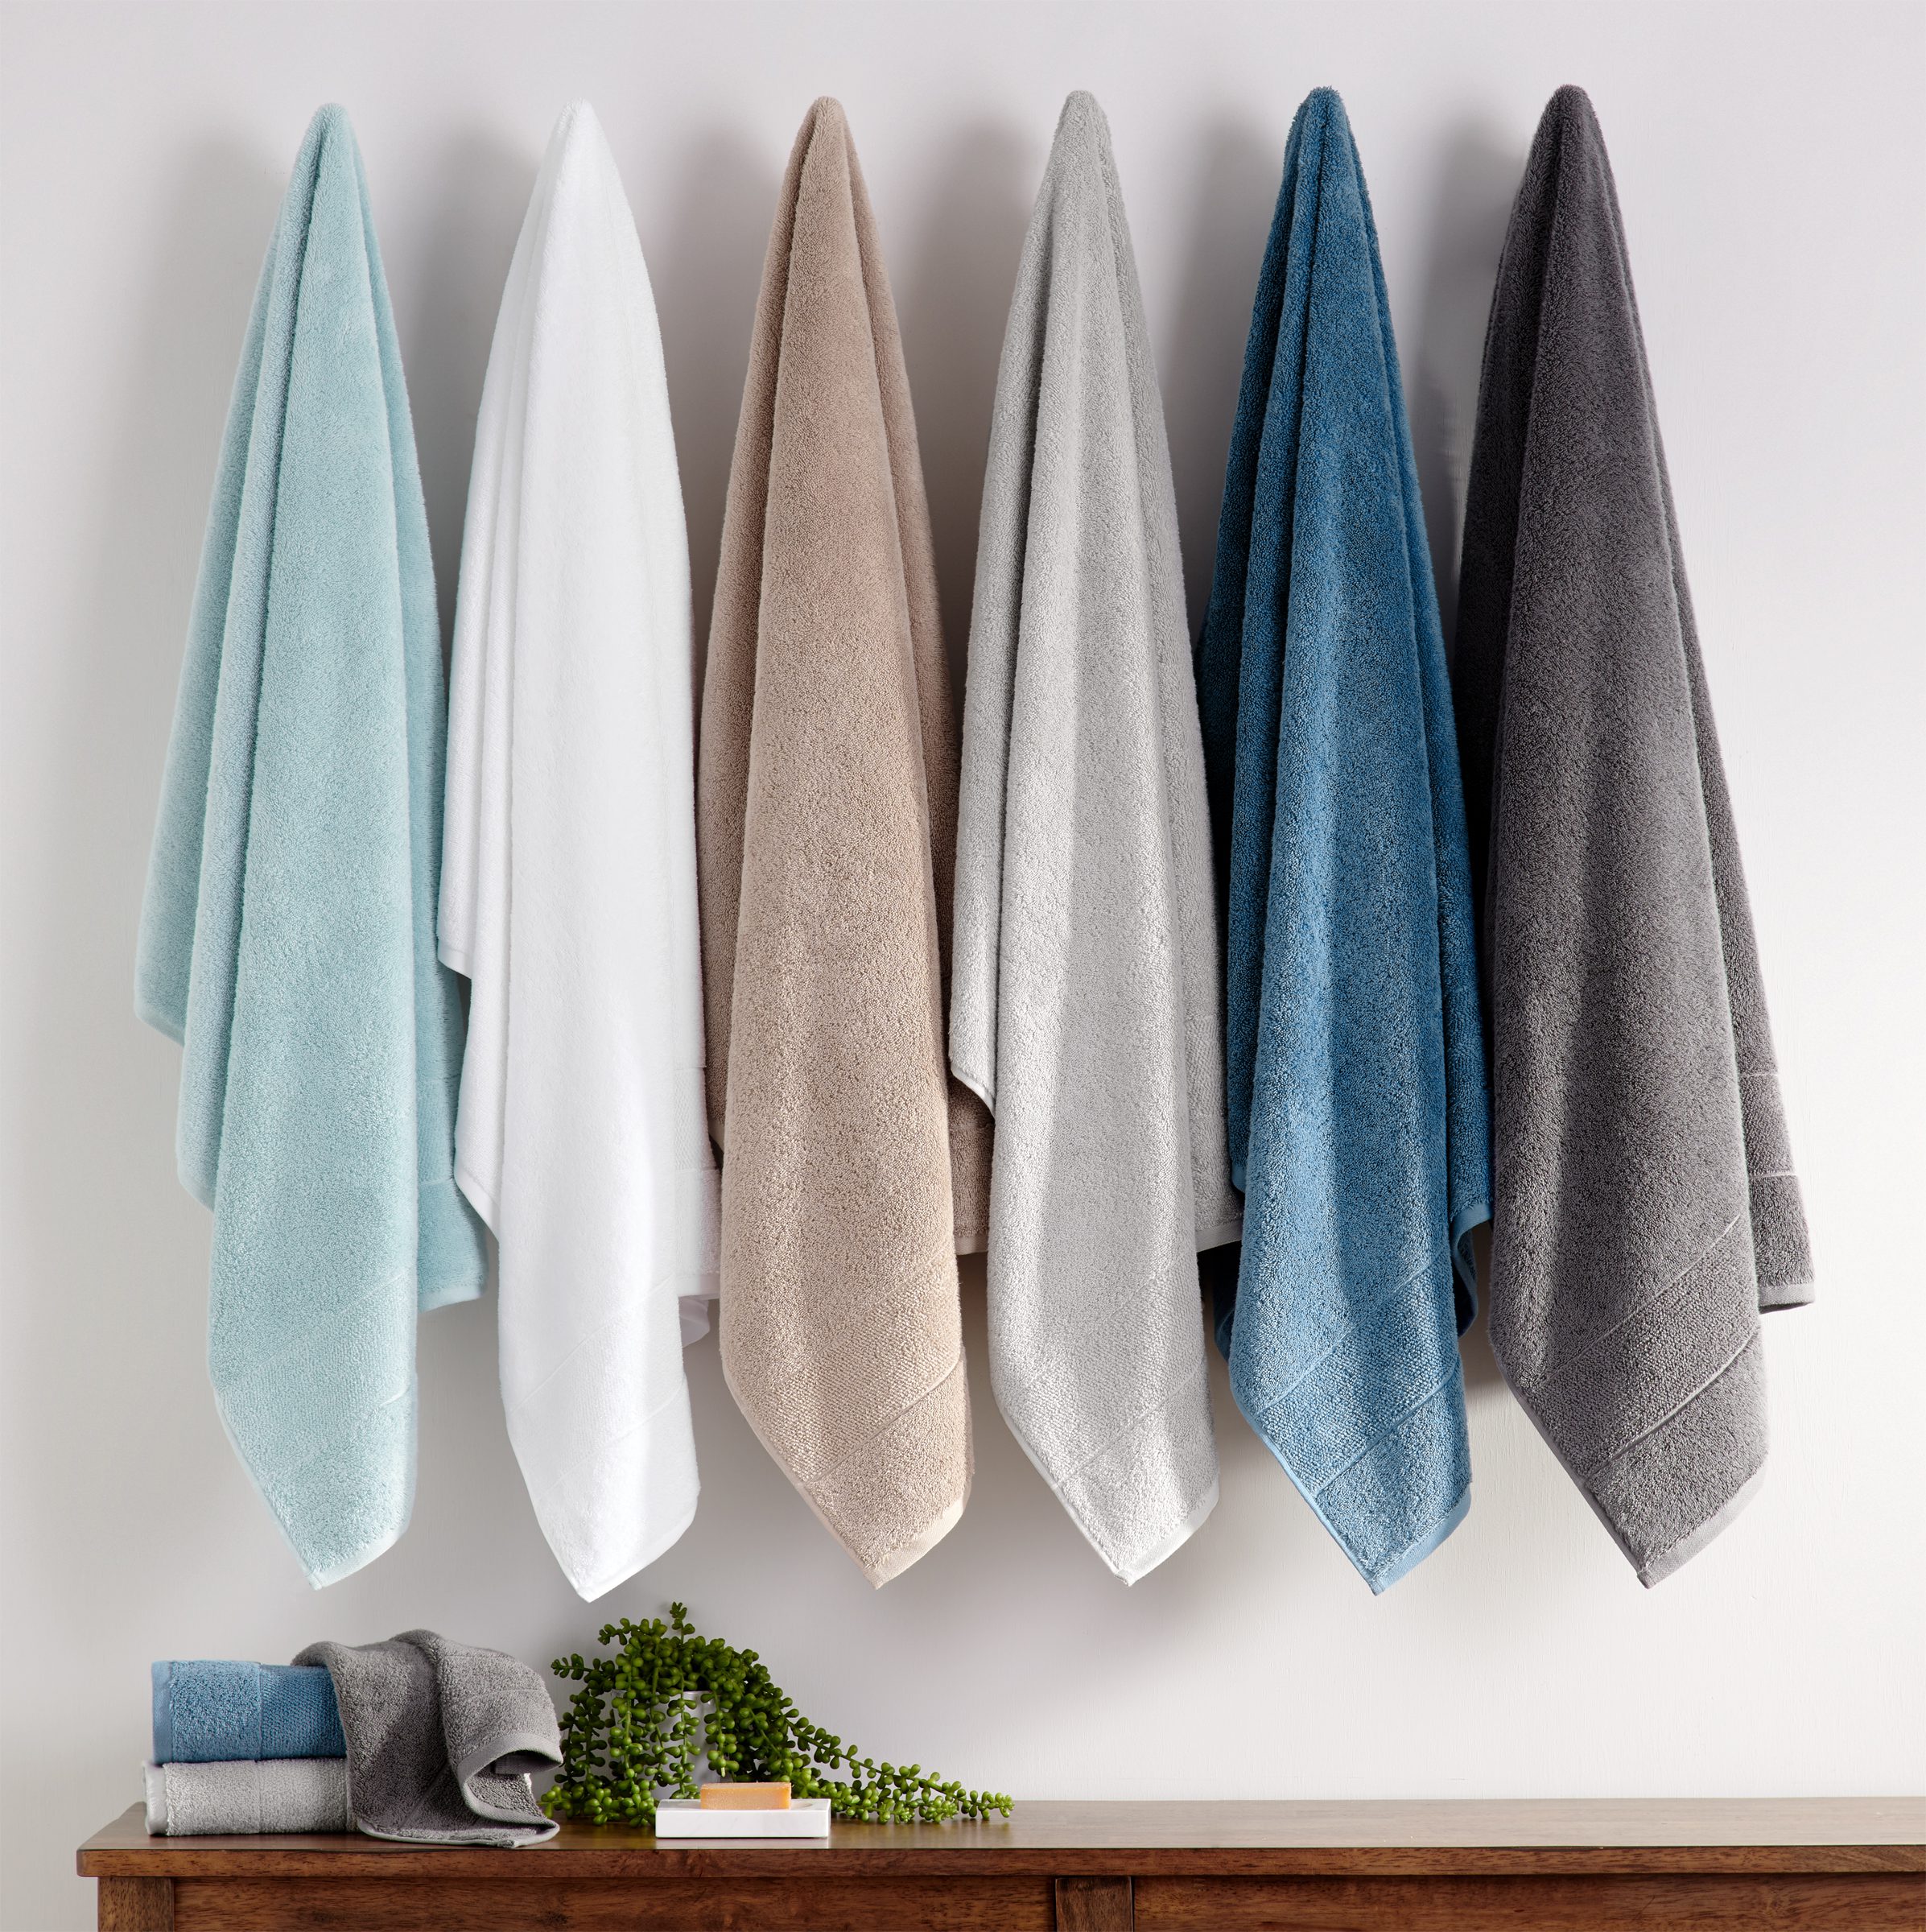 Wholesale Bath Towel Sets - Light Grey, 100% Cotton - DollarDays